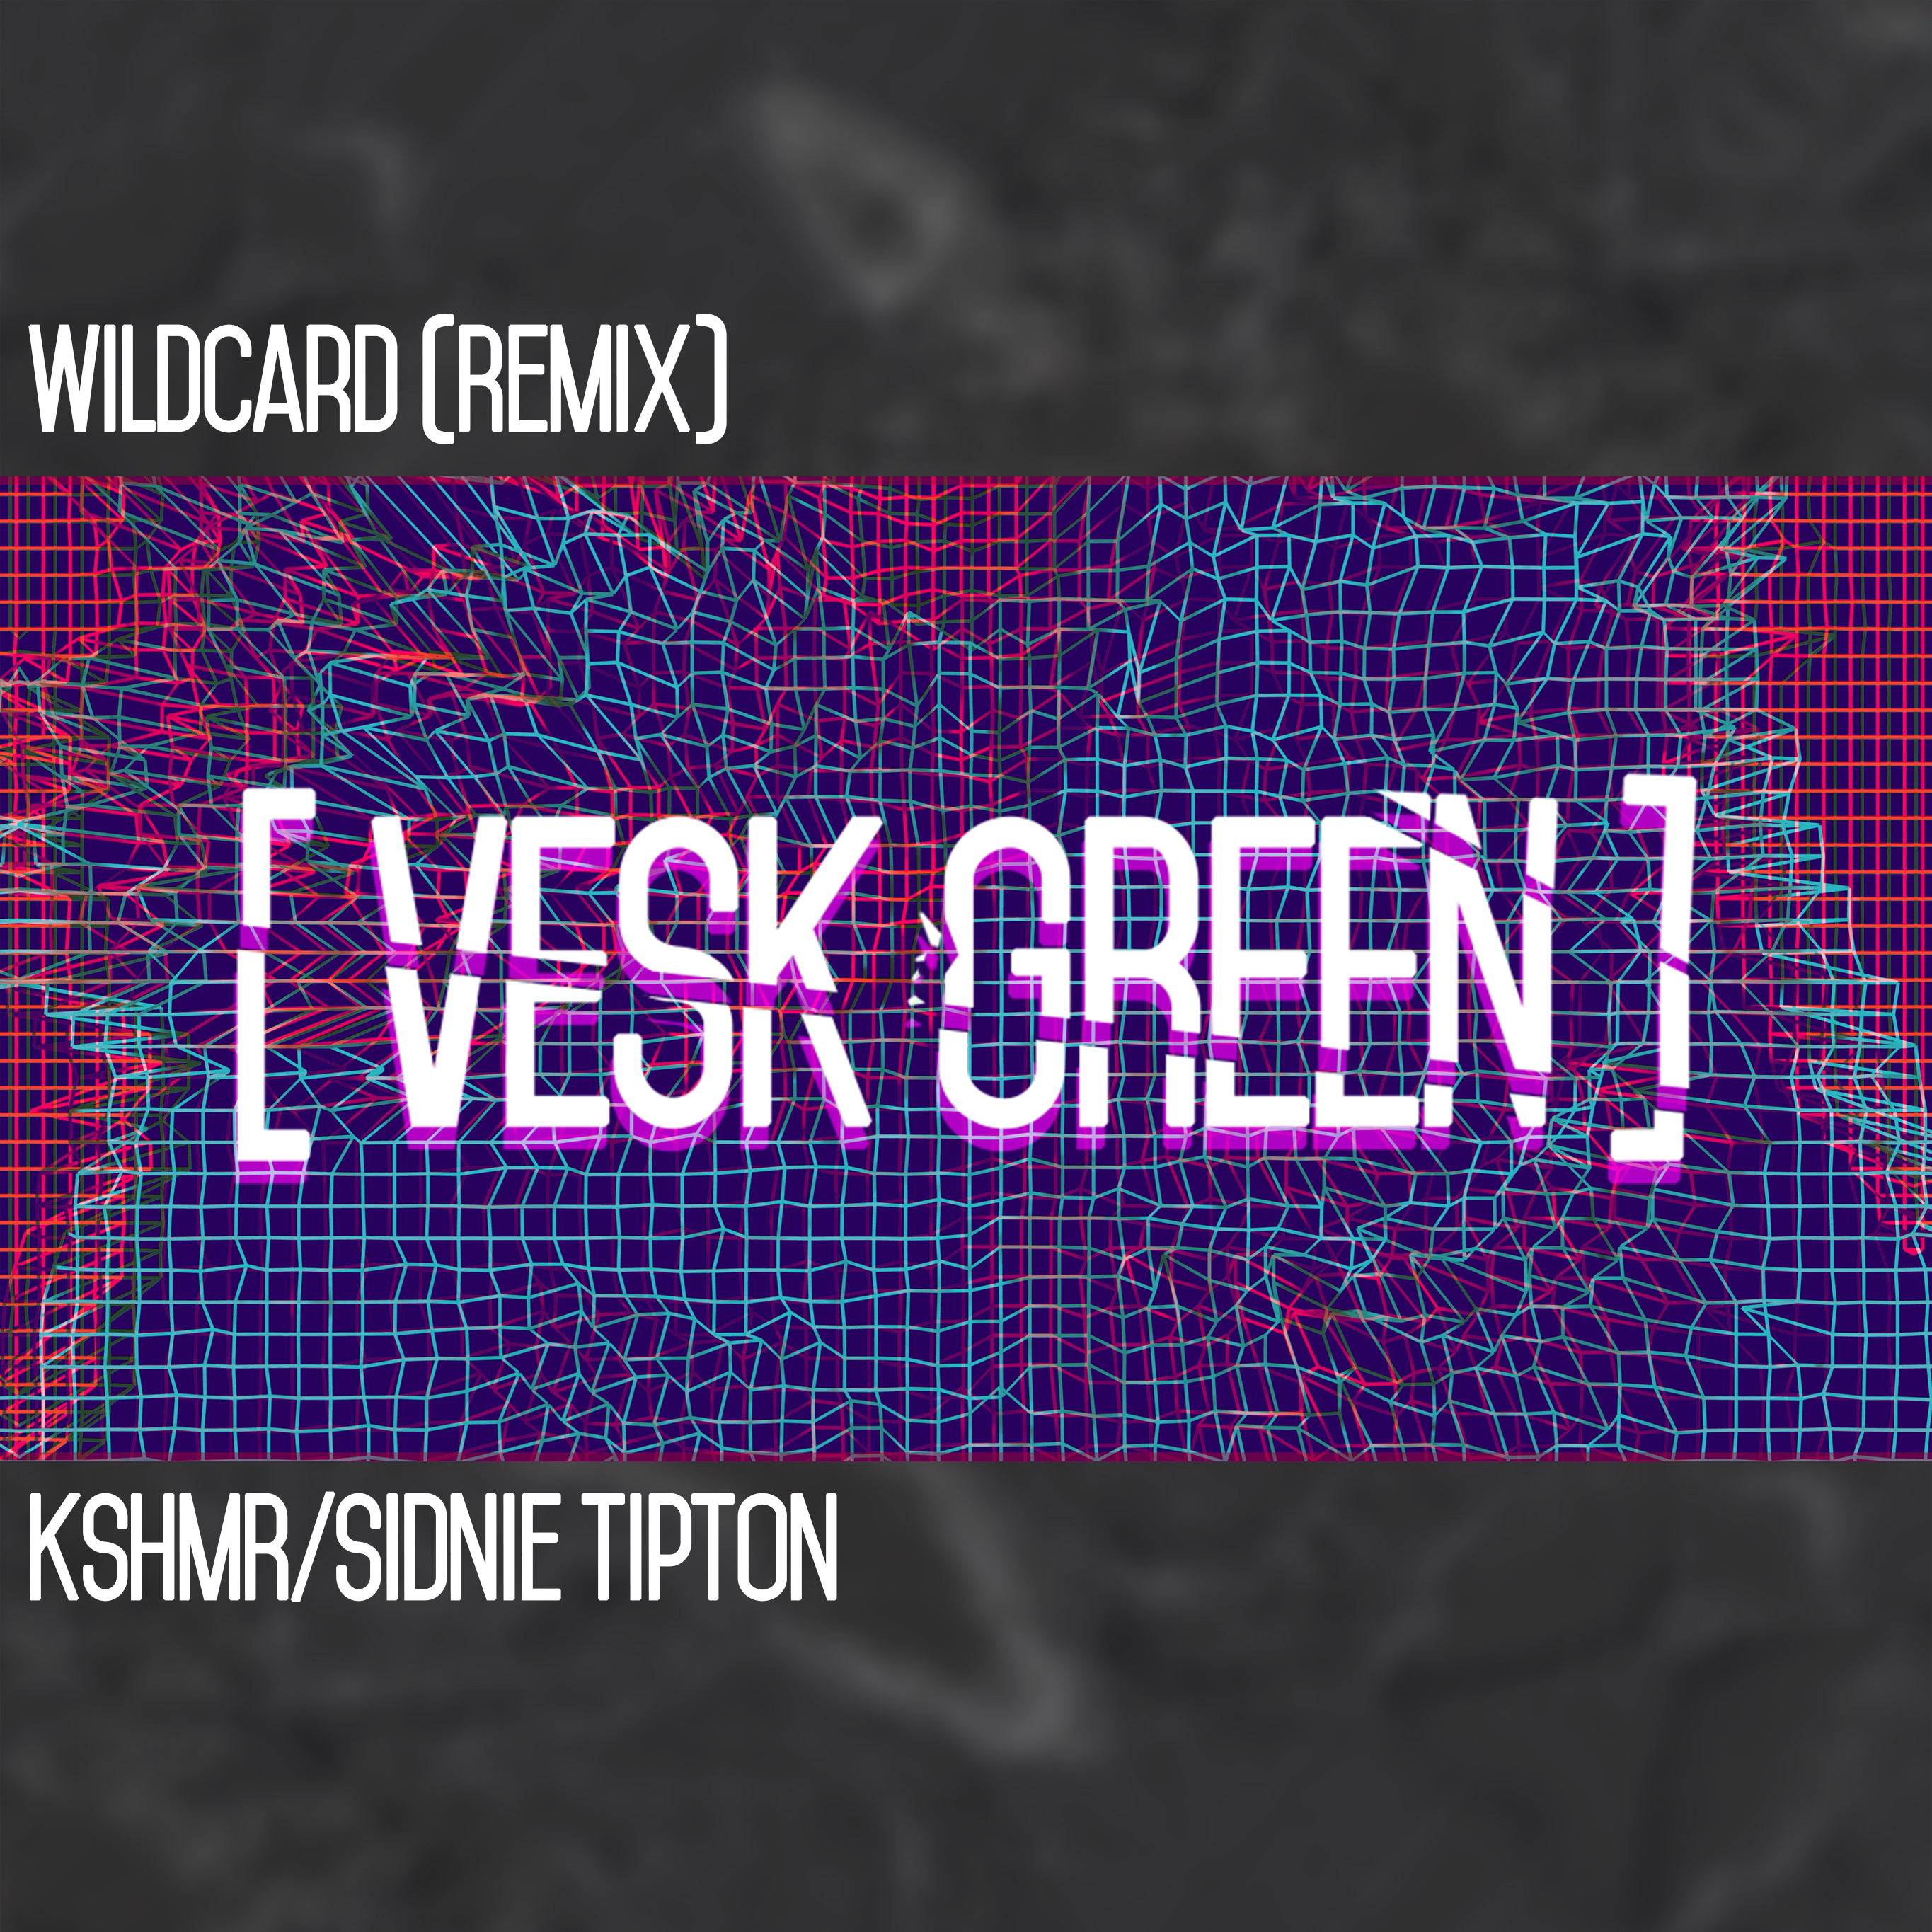 KSHMR  Wildcard  VESK  GREEN  REMIX